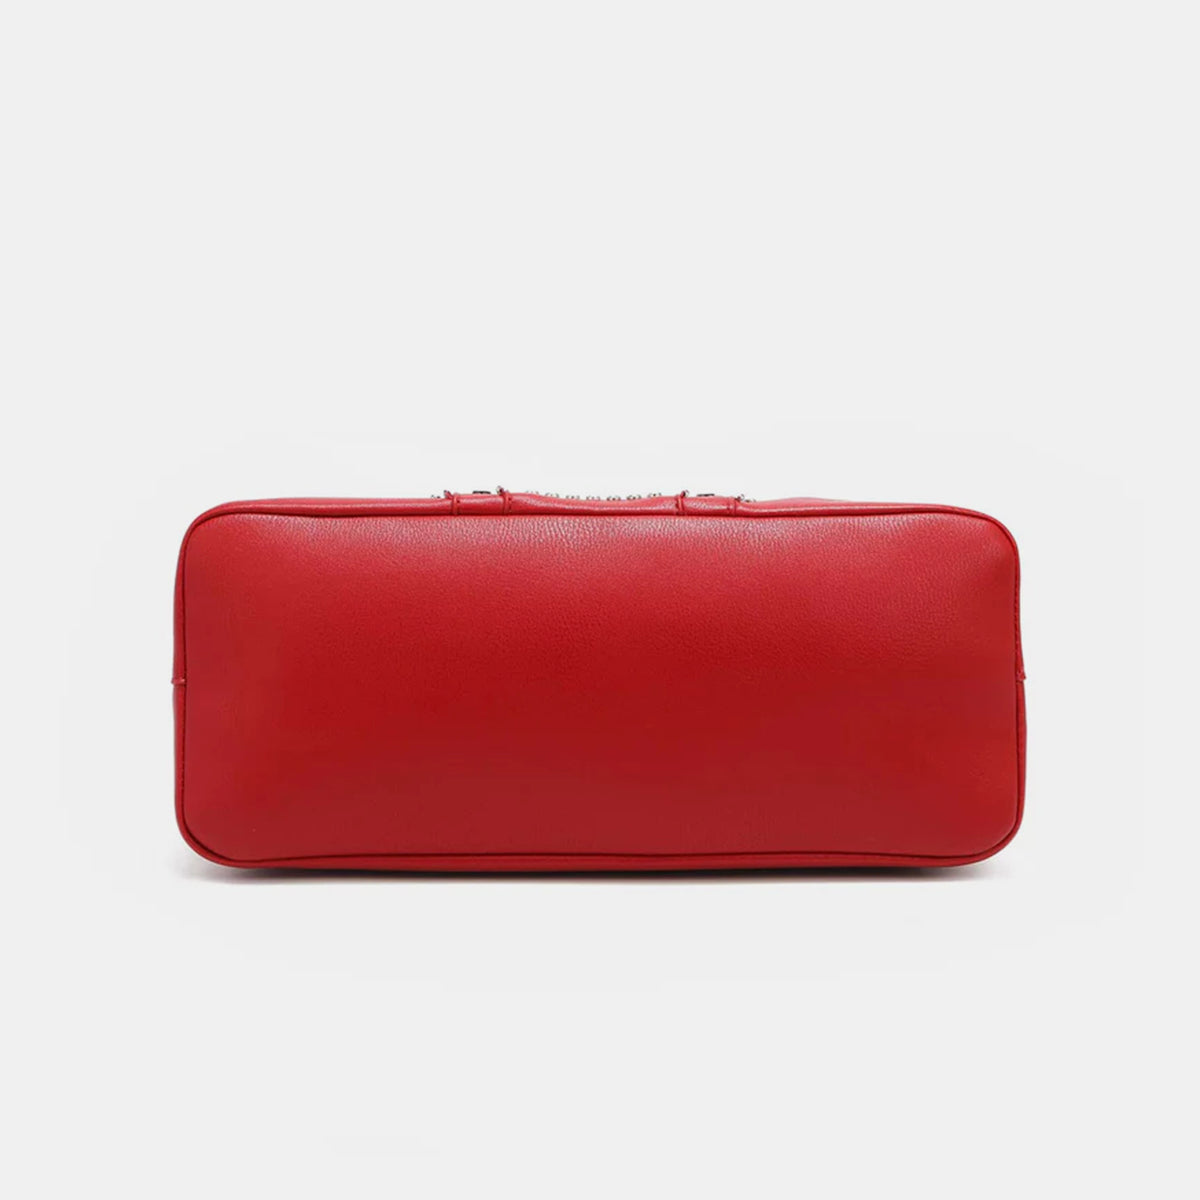 TEEK - NL Studded Decor Handbag BAG TEEK Trend   